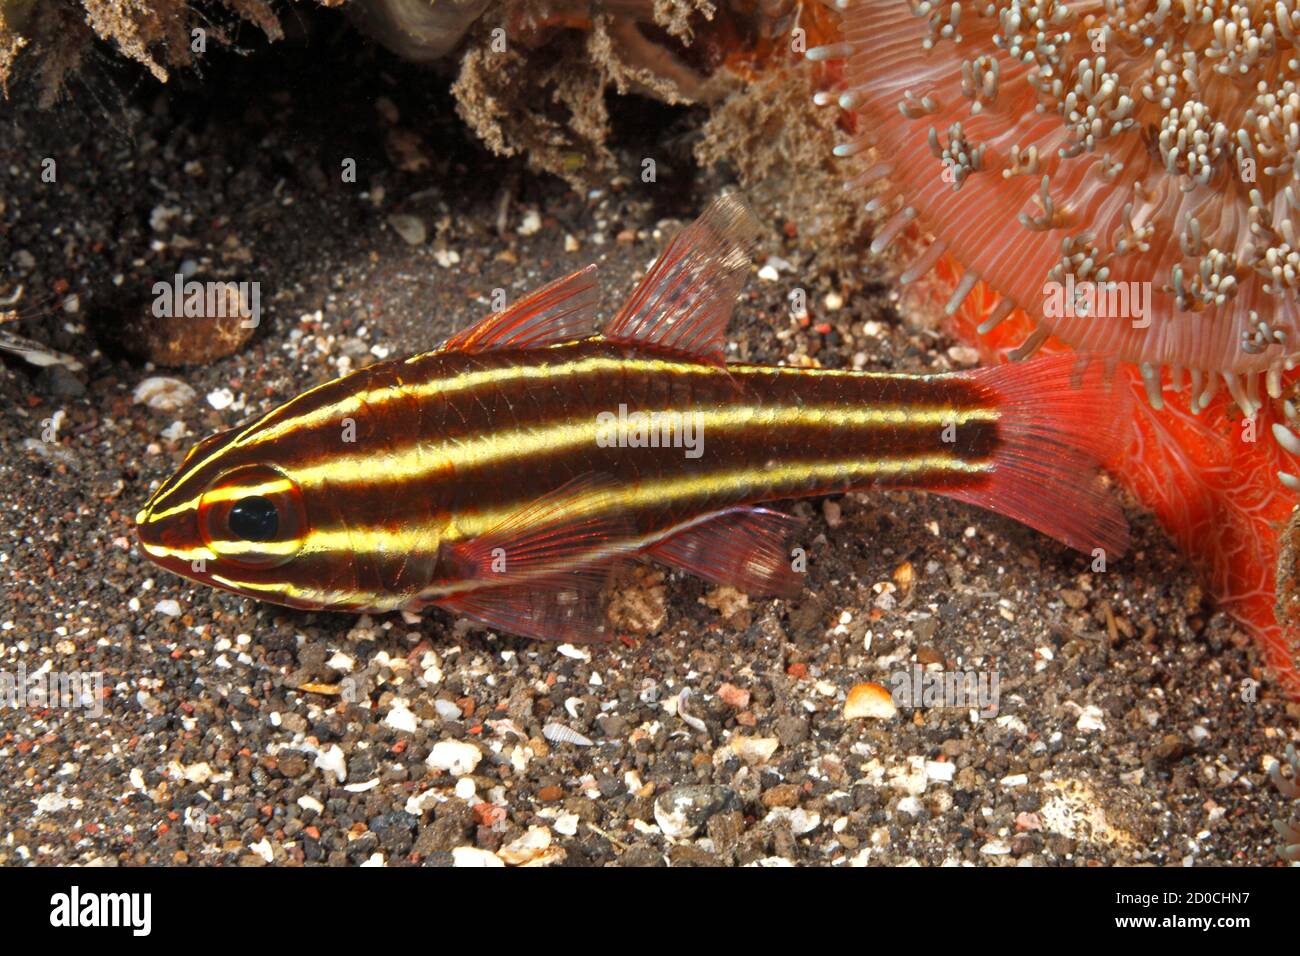 Blackstripe Cardinalfish, Ostorhinchus nigrofasciatus, previously described as Apogon nigrofasciatus. Tulamben, Bali Indonesia. Bali Sea, Indian Ocean Stock Photo